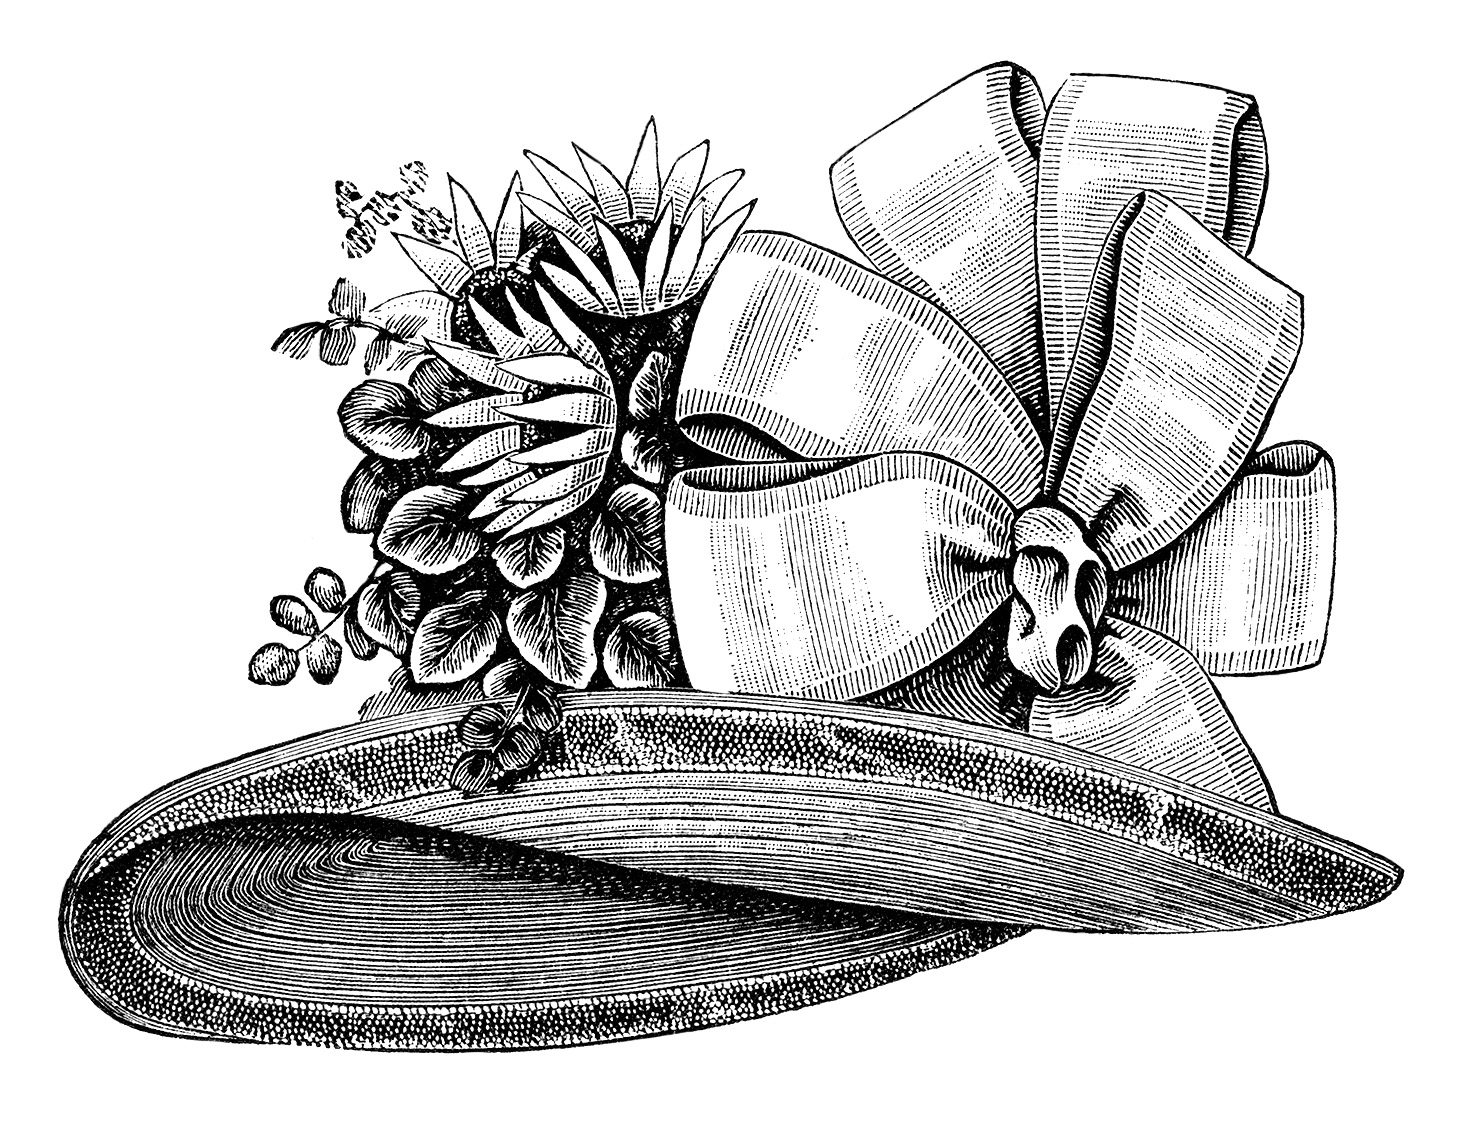 Ladies' Victorian Hat ~ Free Vintage Clip Art | Old Design Shop Blog